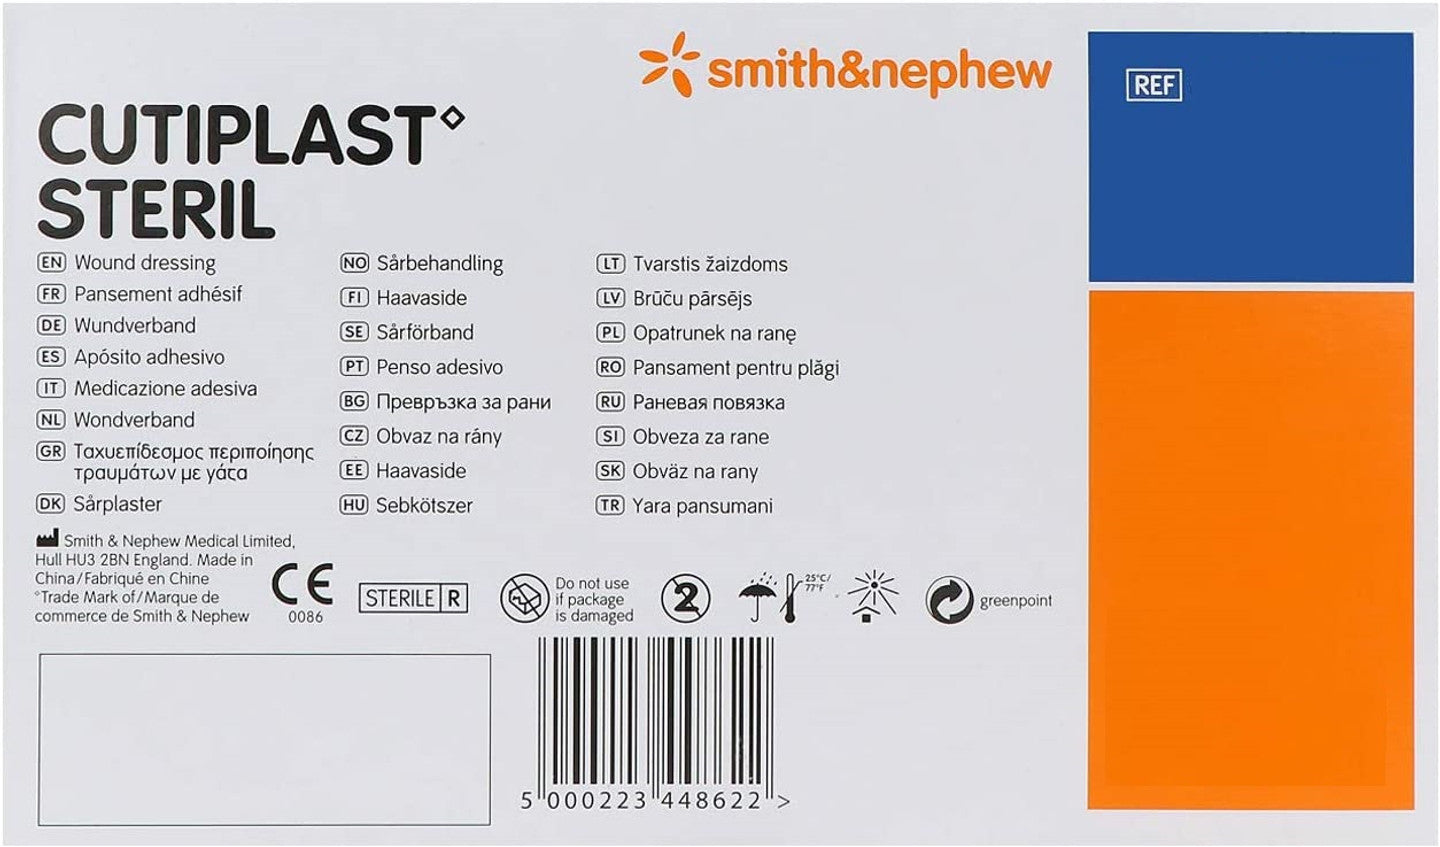 Cutiplast Sterile Post-Operative Wound Dressing - 7.2cm x 5cm - Pack of 100